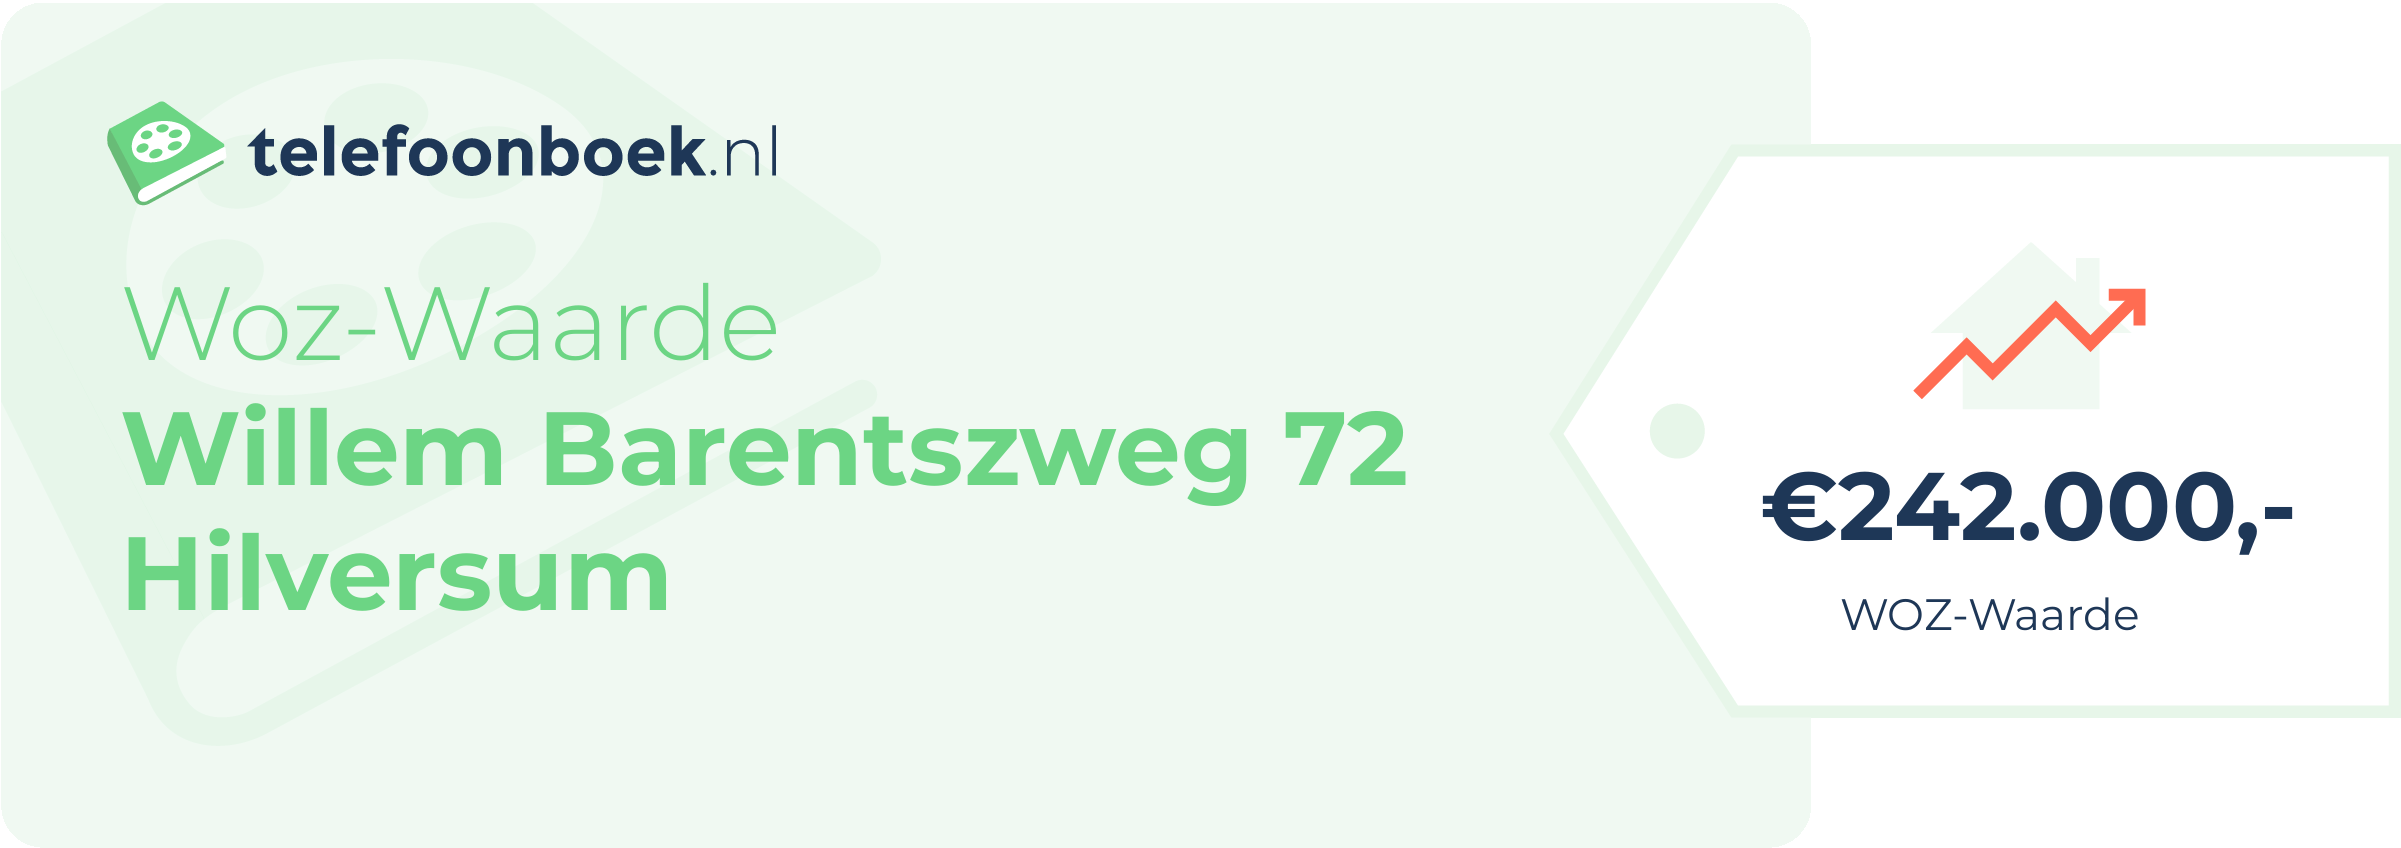 WOZ-waarde Willem Barentszweg 72 Hilversum